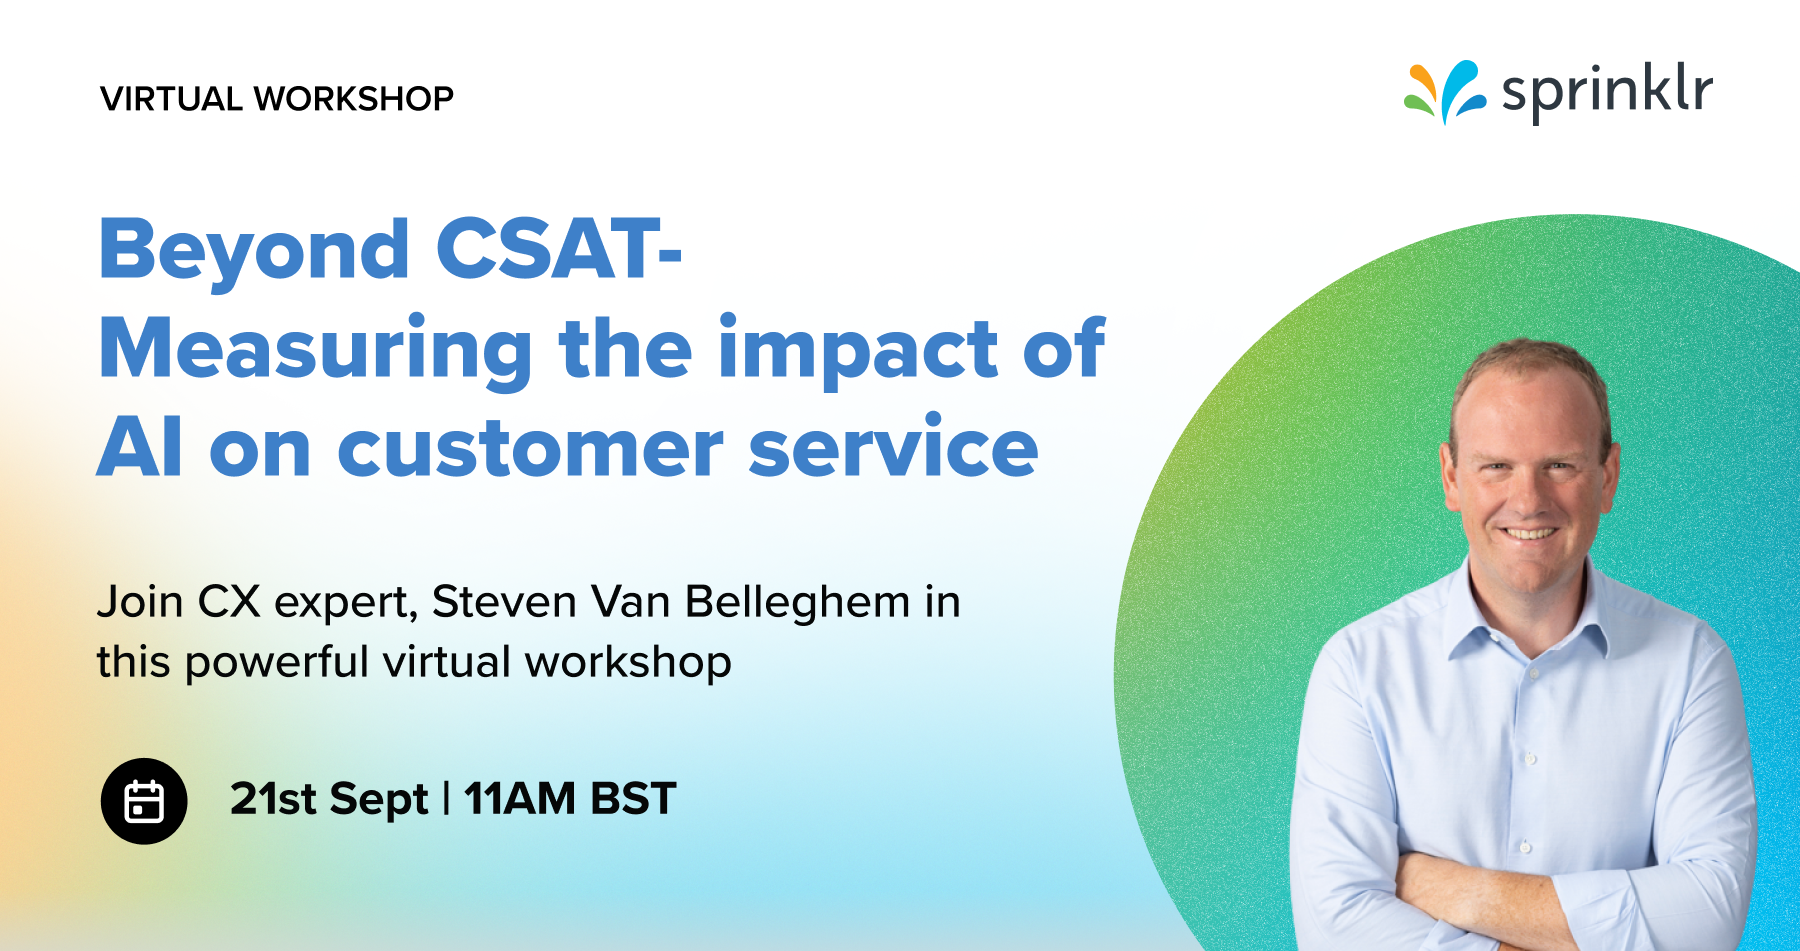 Beyond CSAT: Measuring the impact of AI on customer service